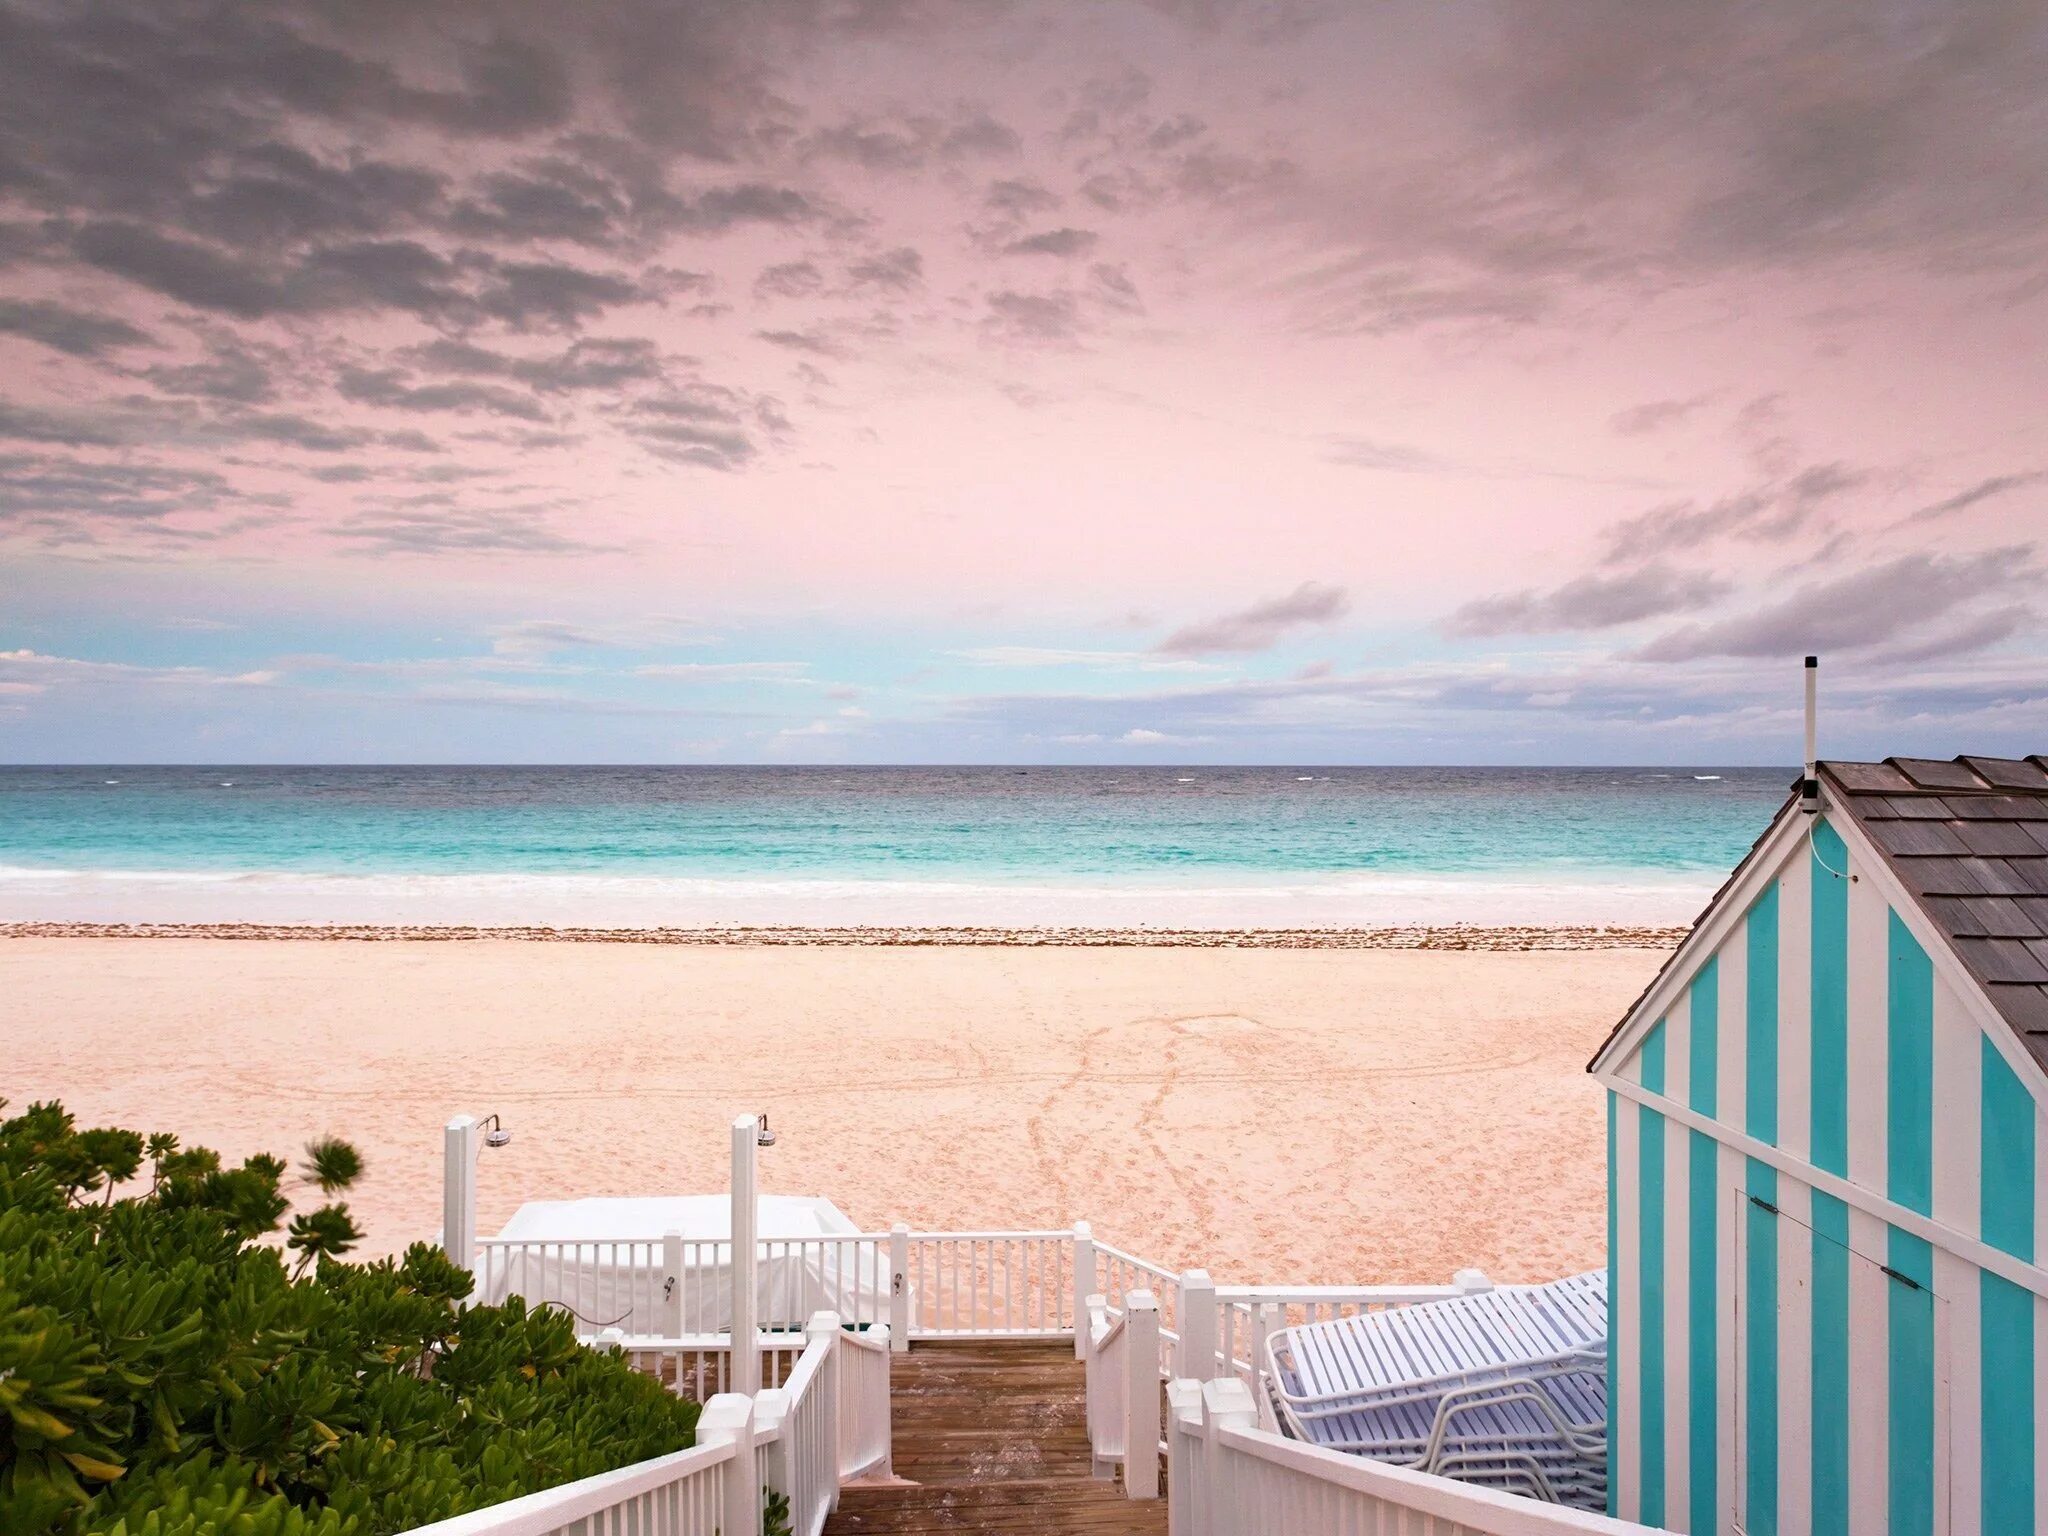 Пинк-Сэндс-Бич, Багамские острова. Pink Sands Beach Багамские острова. Пляж Пинк-Сэнд-Бич, Харбор, Багамские острова. Розовый пляж на Харбор-Айленд Багамы. Harbor island